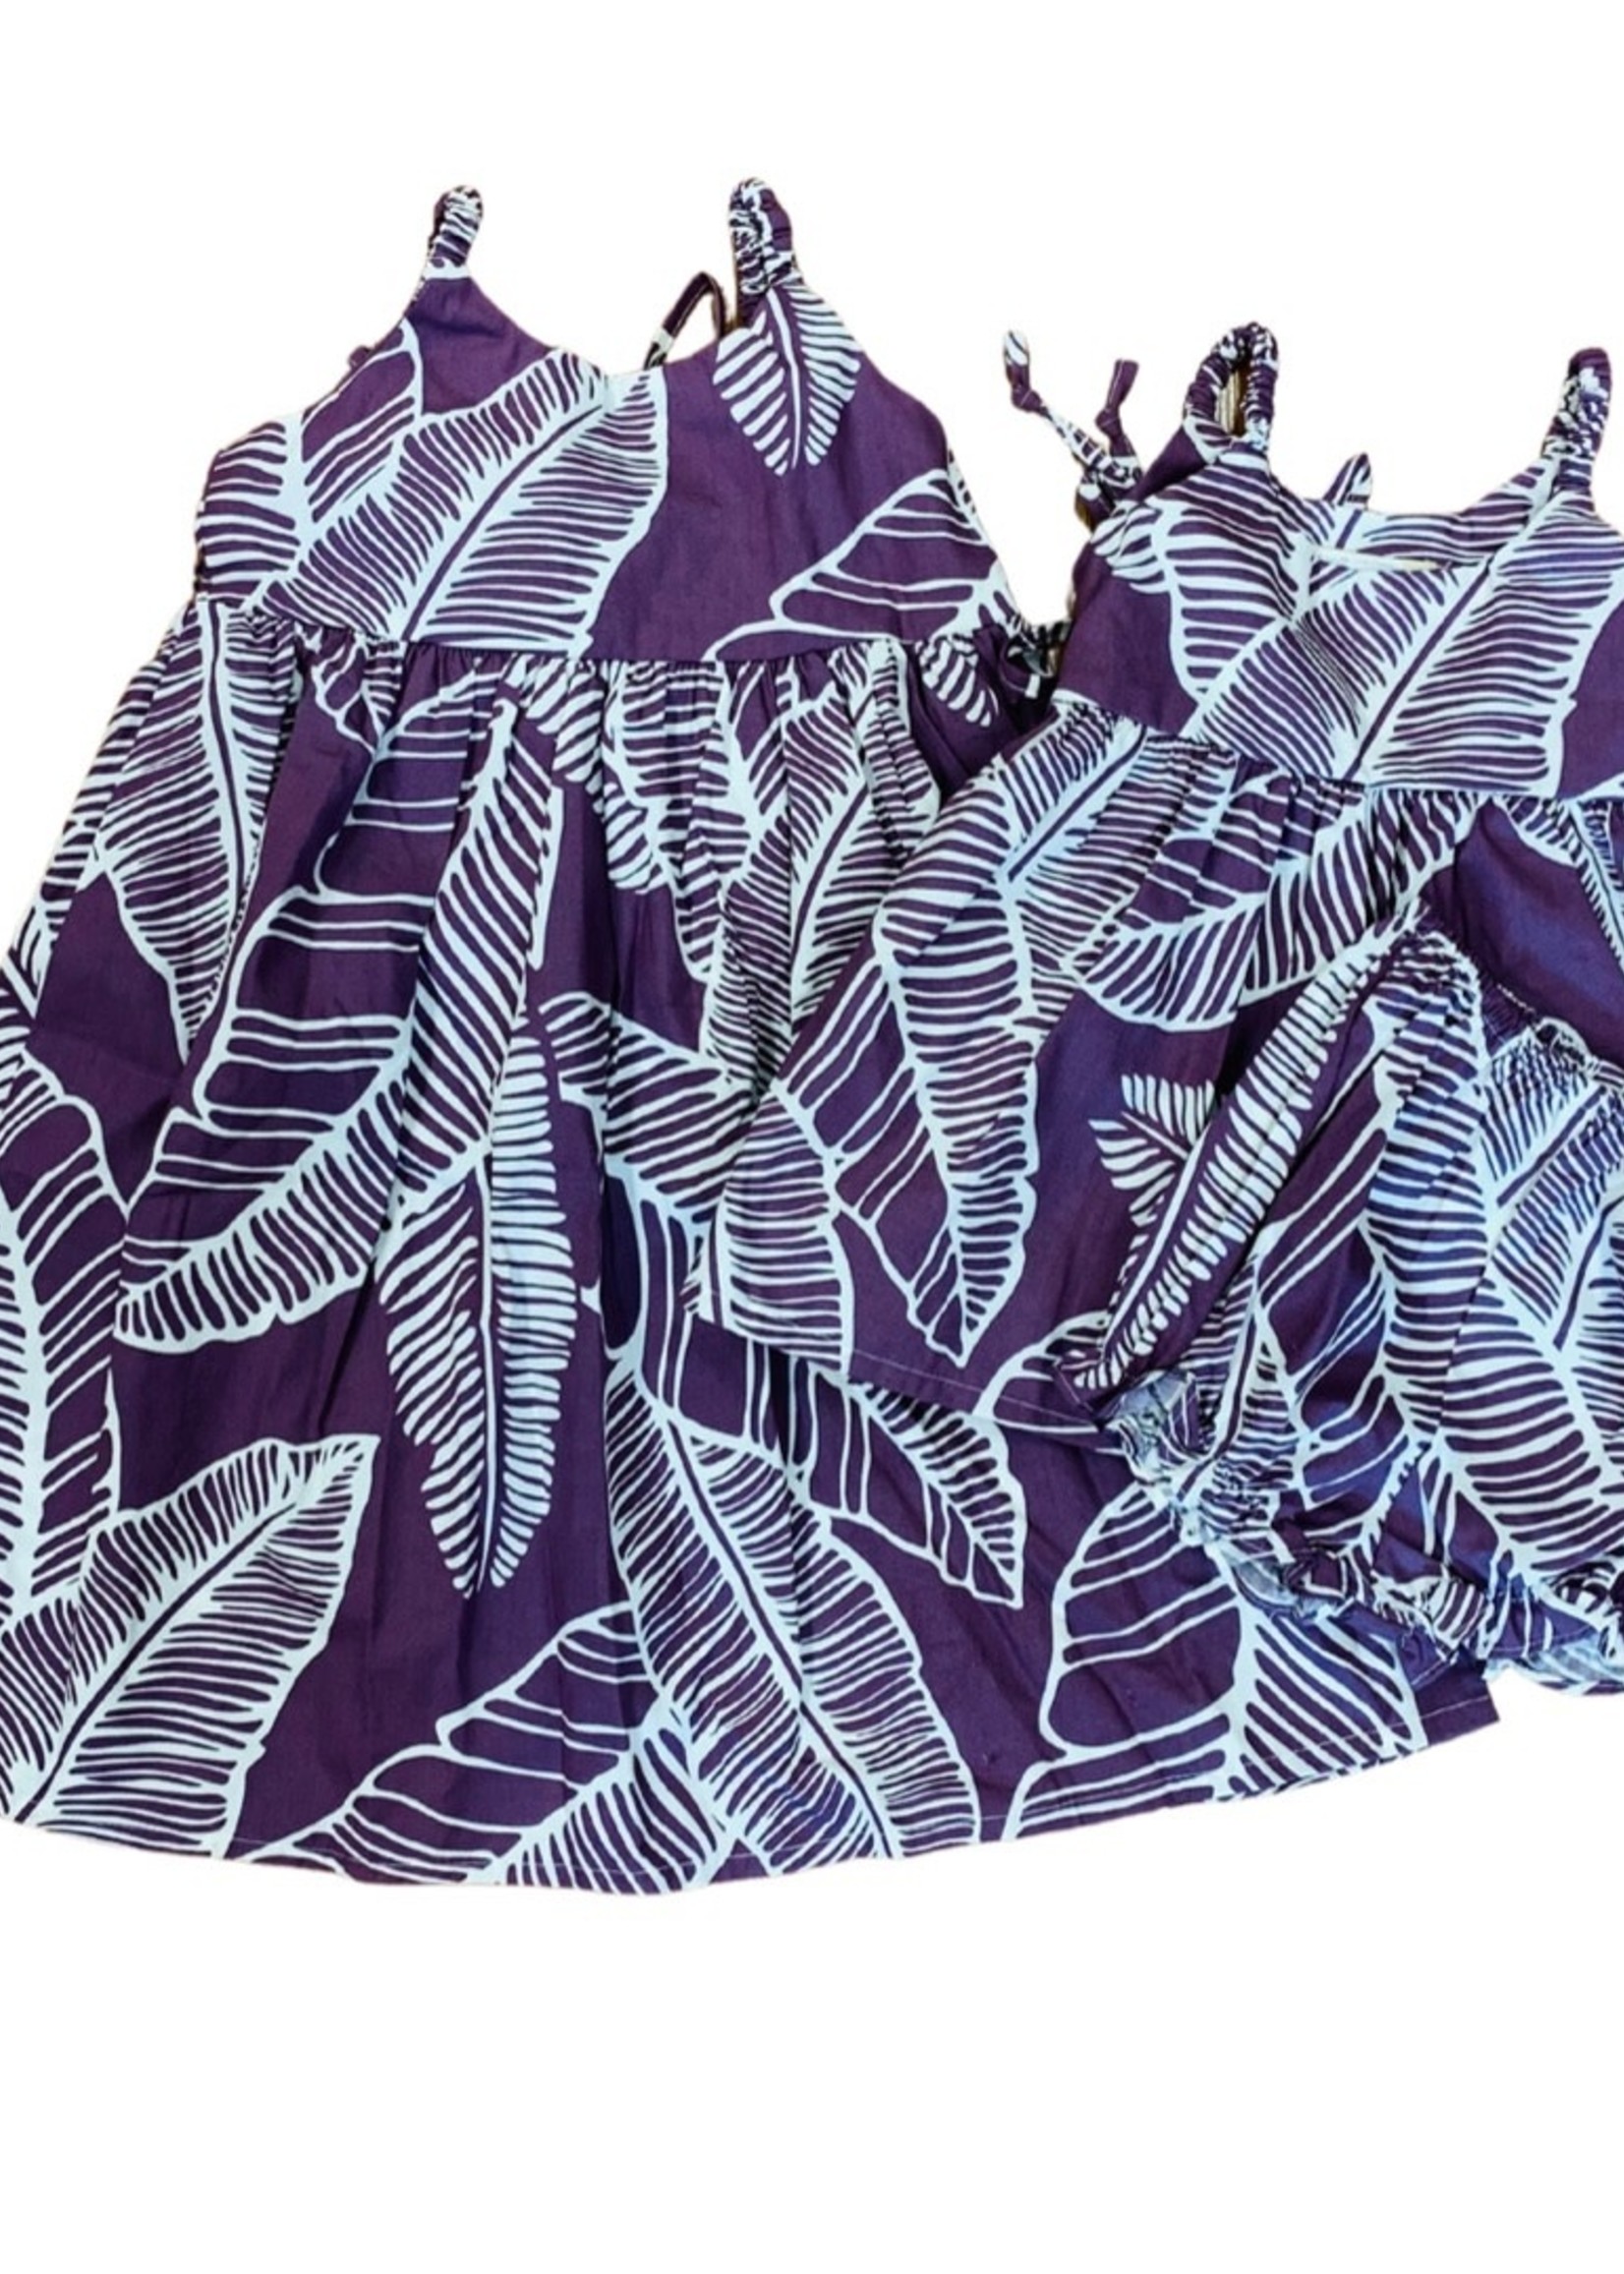 Kilohana Clothing Co. Girls Dress - Lavender Banana Leaf